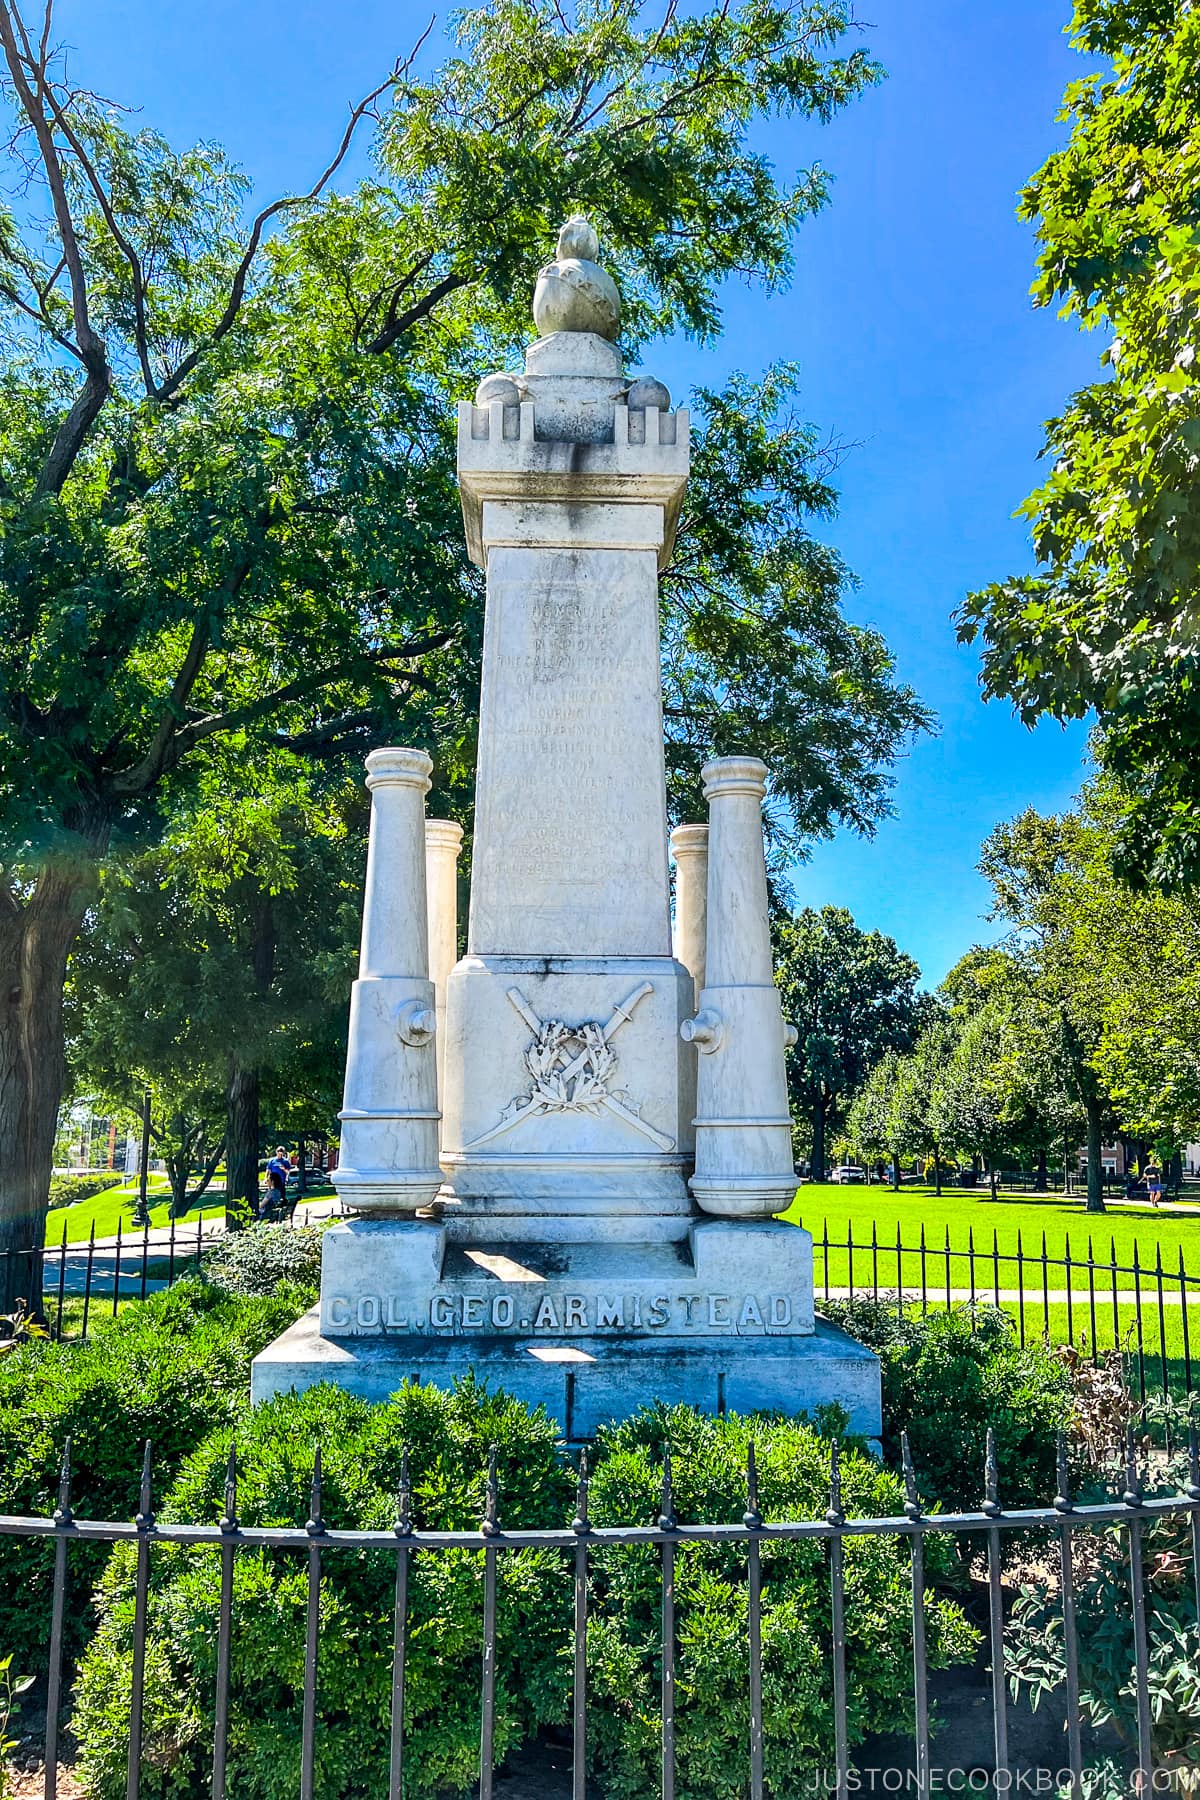 Statua di Armistead al Federal Hill Park